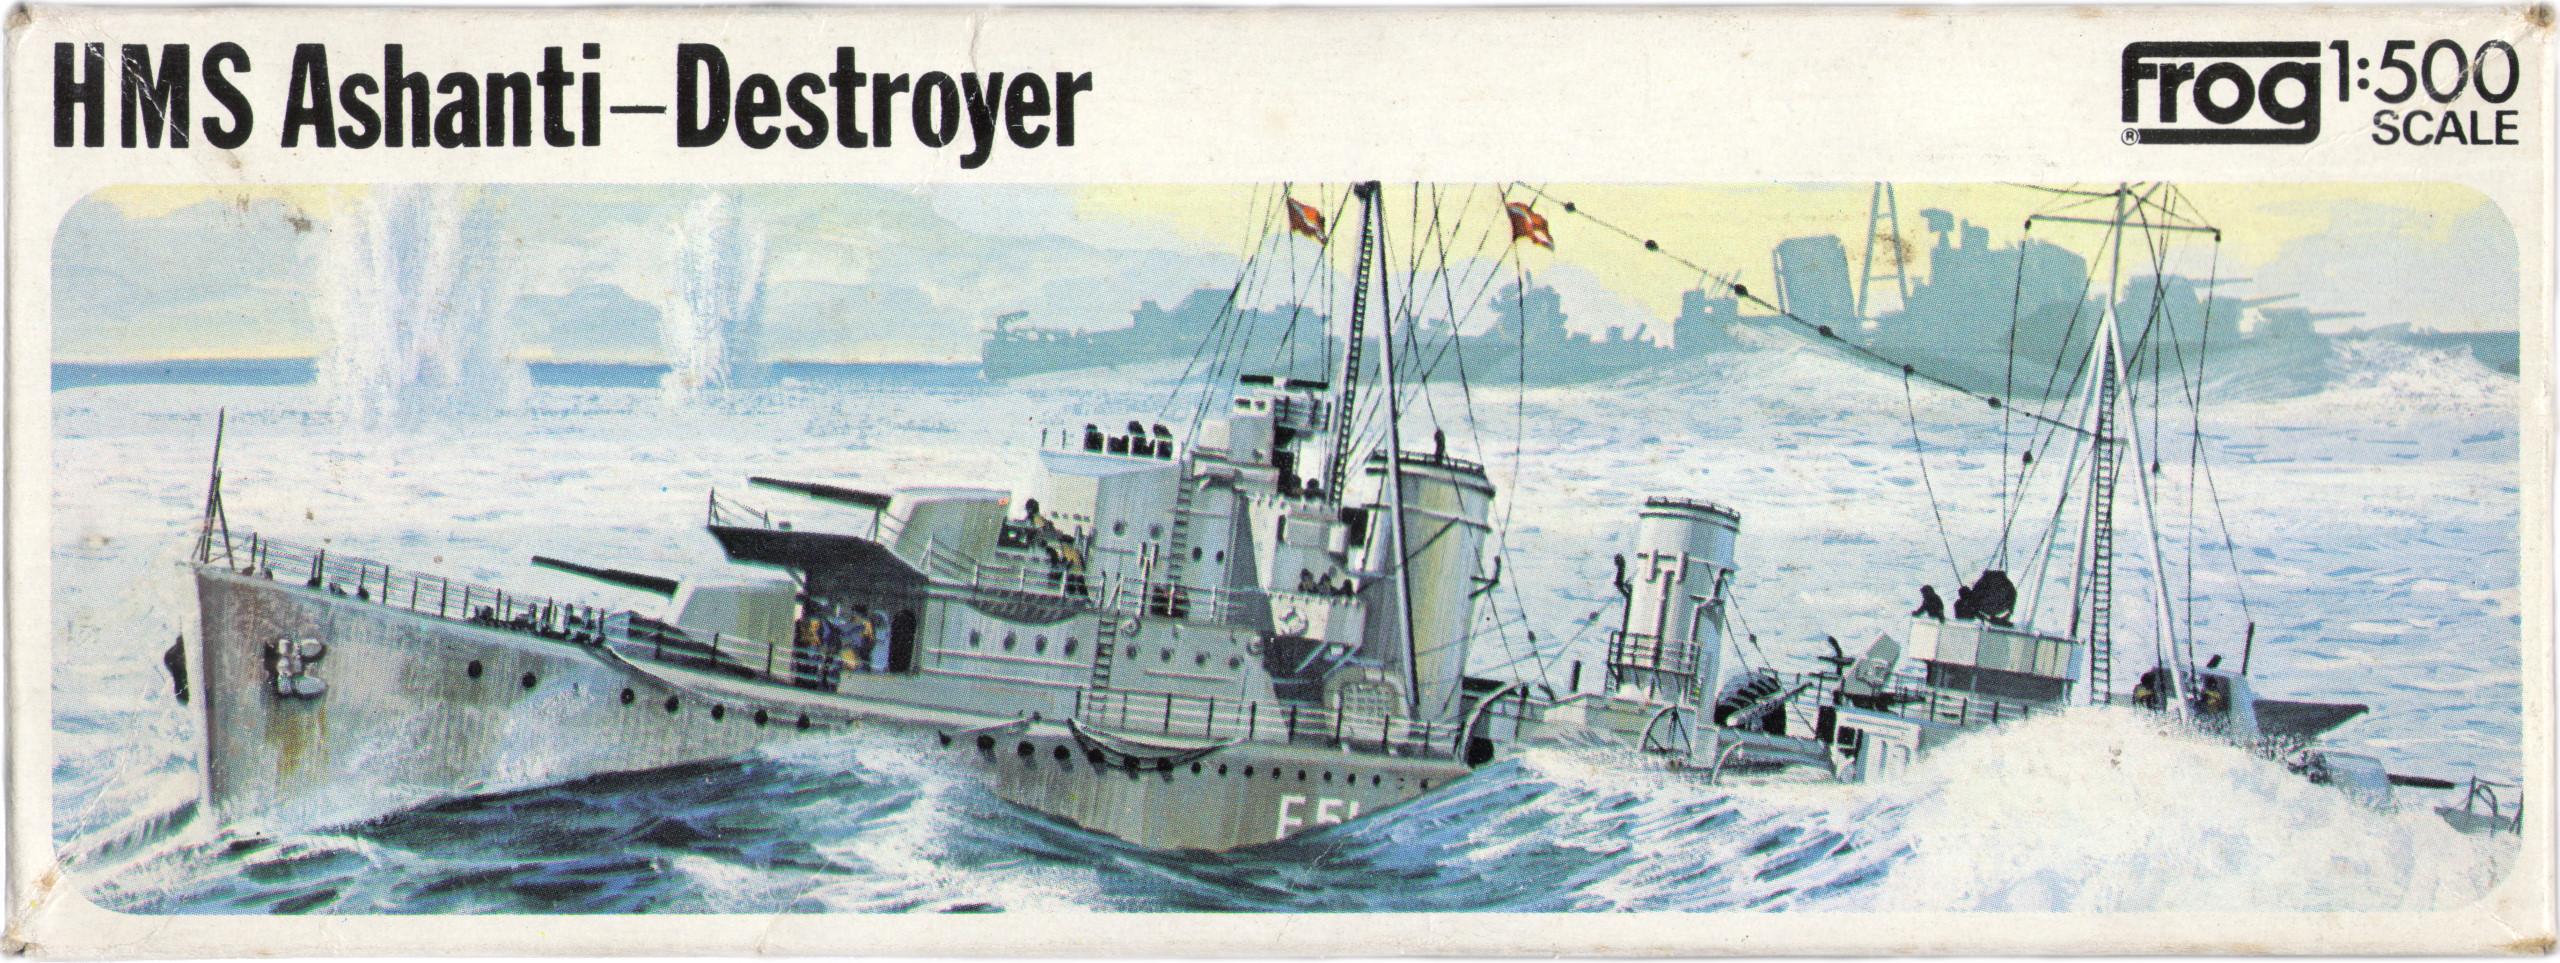 FROG F125 HMS Torquay destroyer, Rovex Models&Hobbies Ltd, 1975